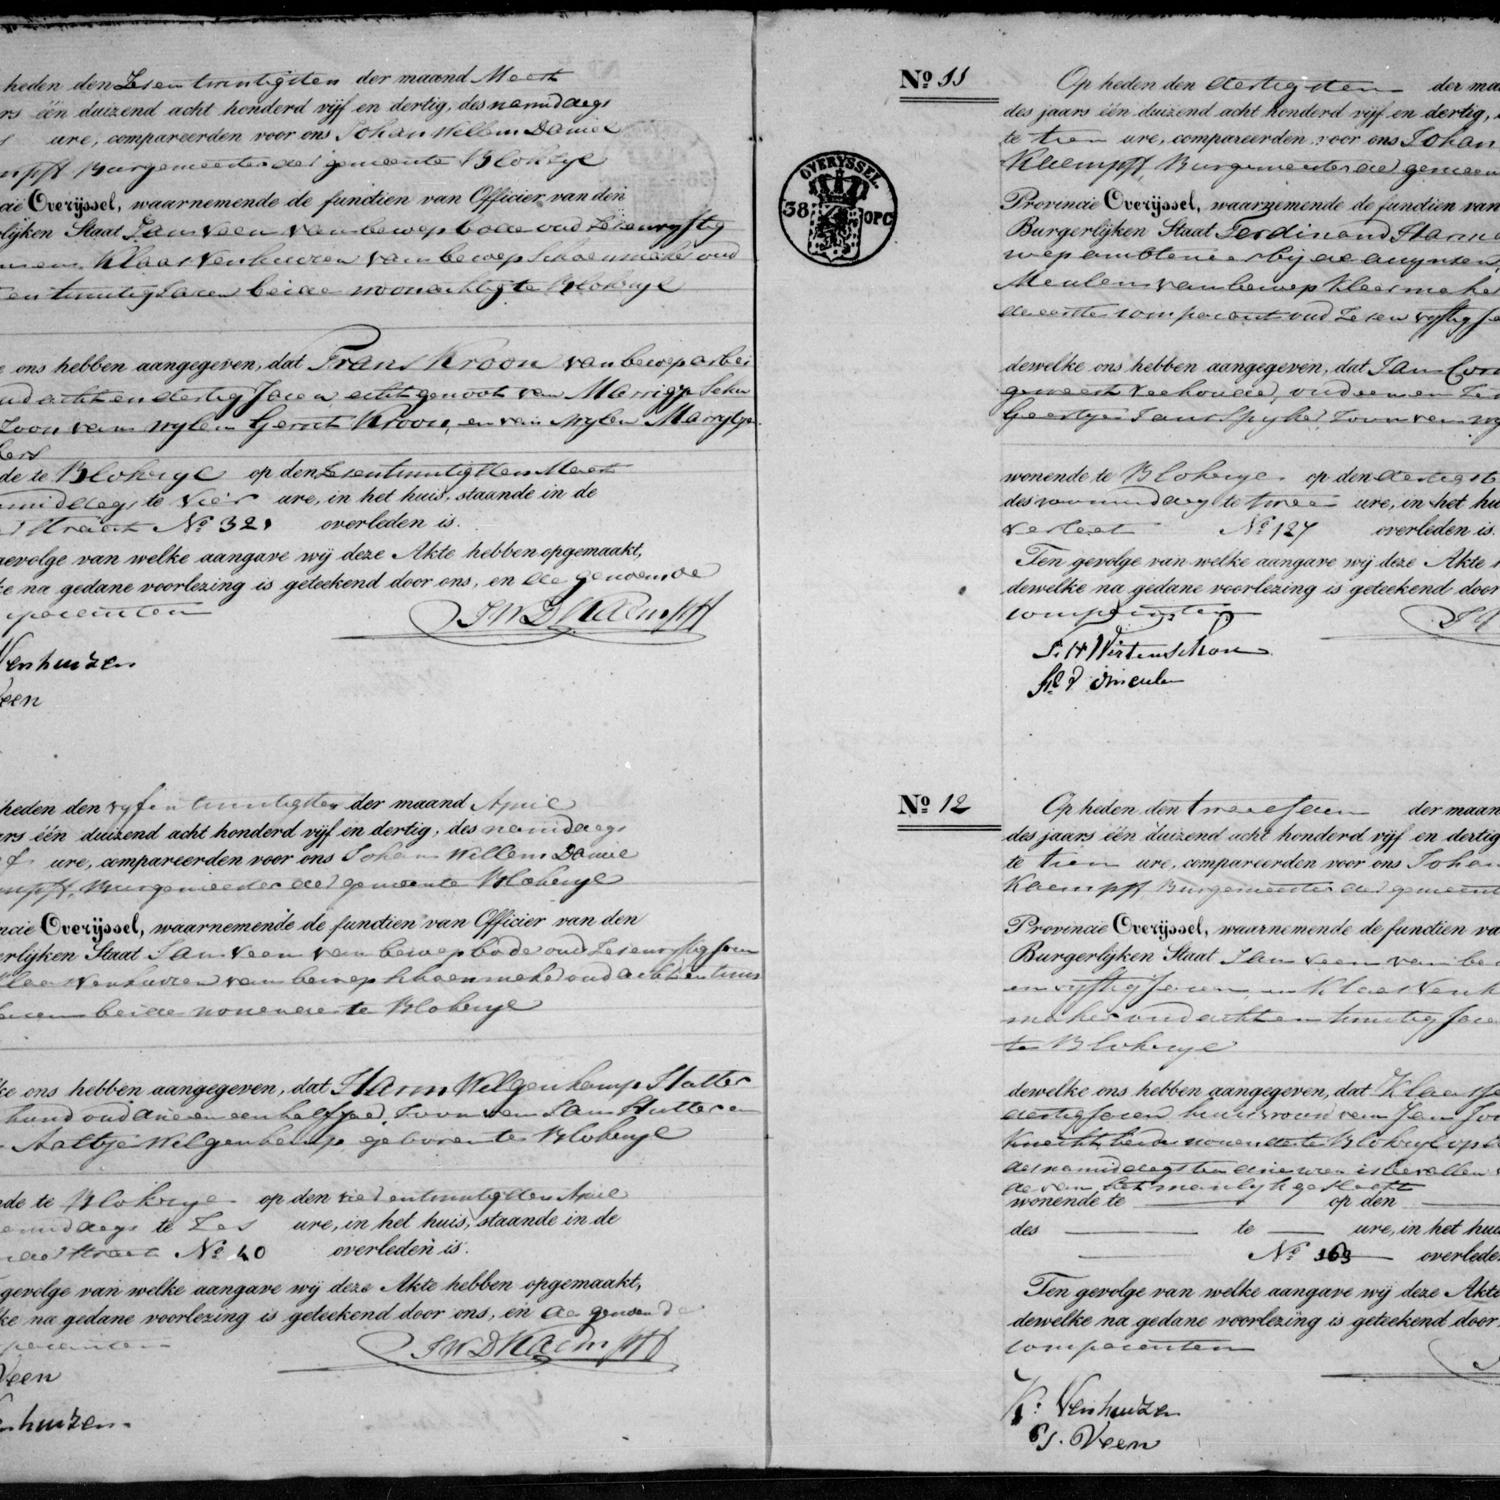 Civil registry of deaths, Blokzijl, April 30, 1835, records 9-12